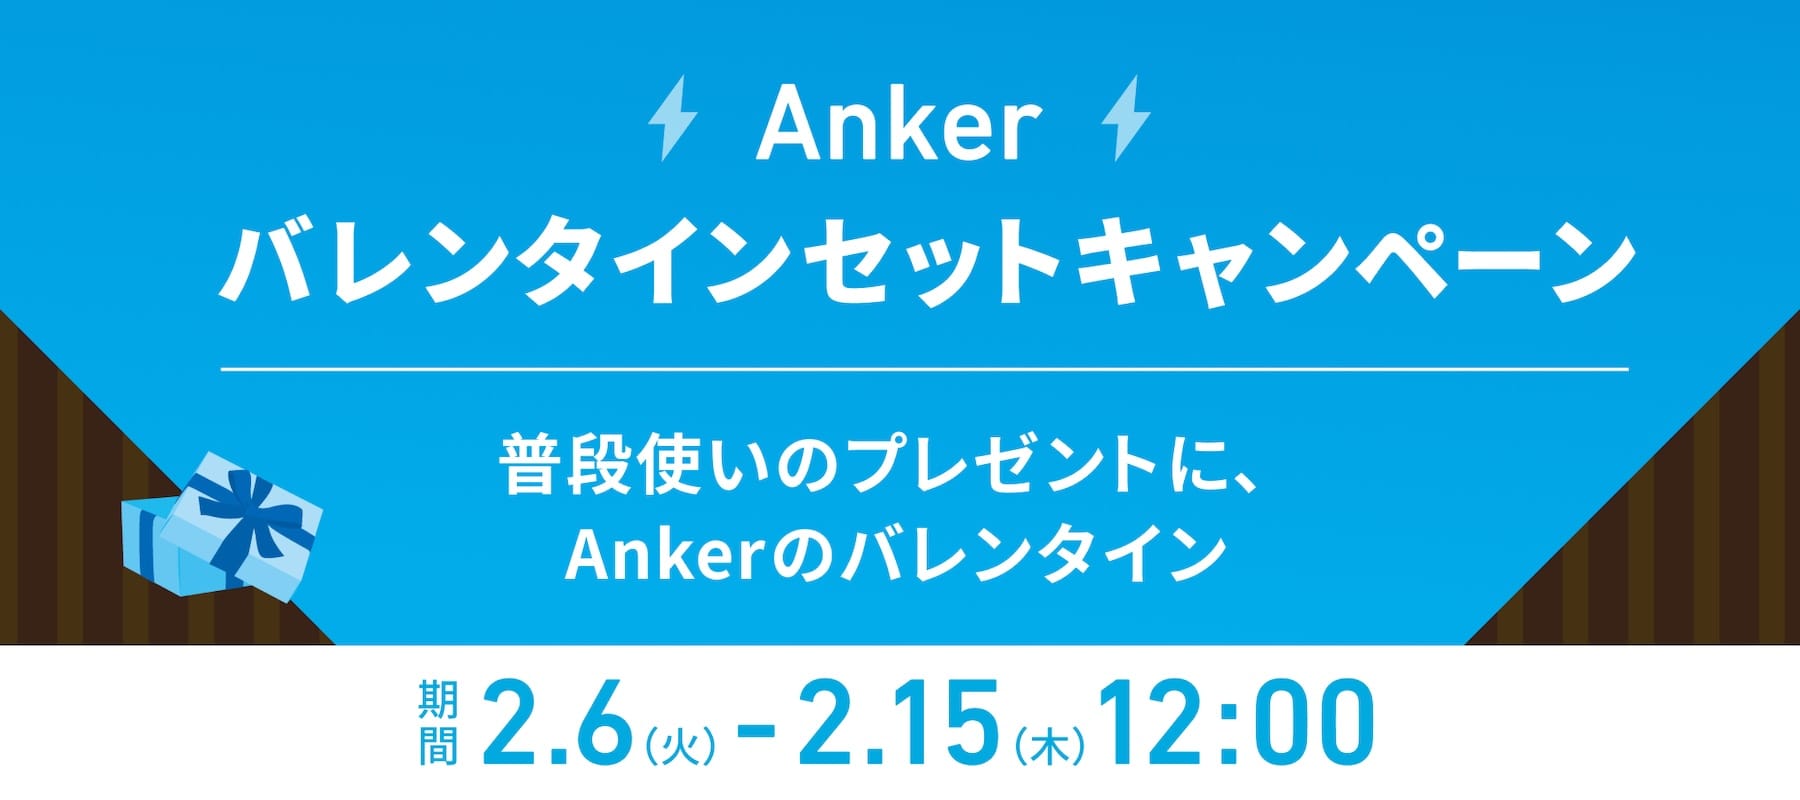 Anker、バレンタインセットを最大40%オフで提供